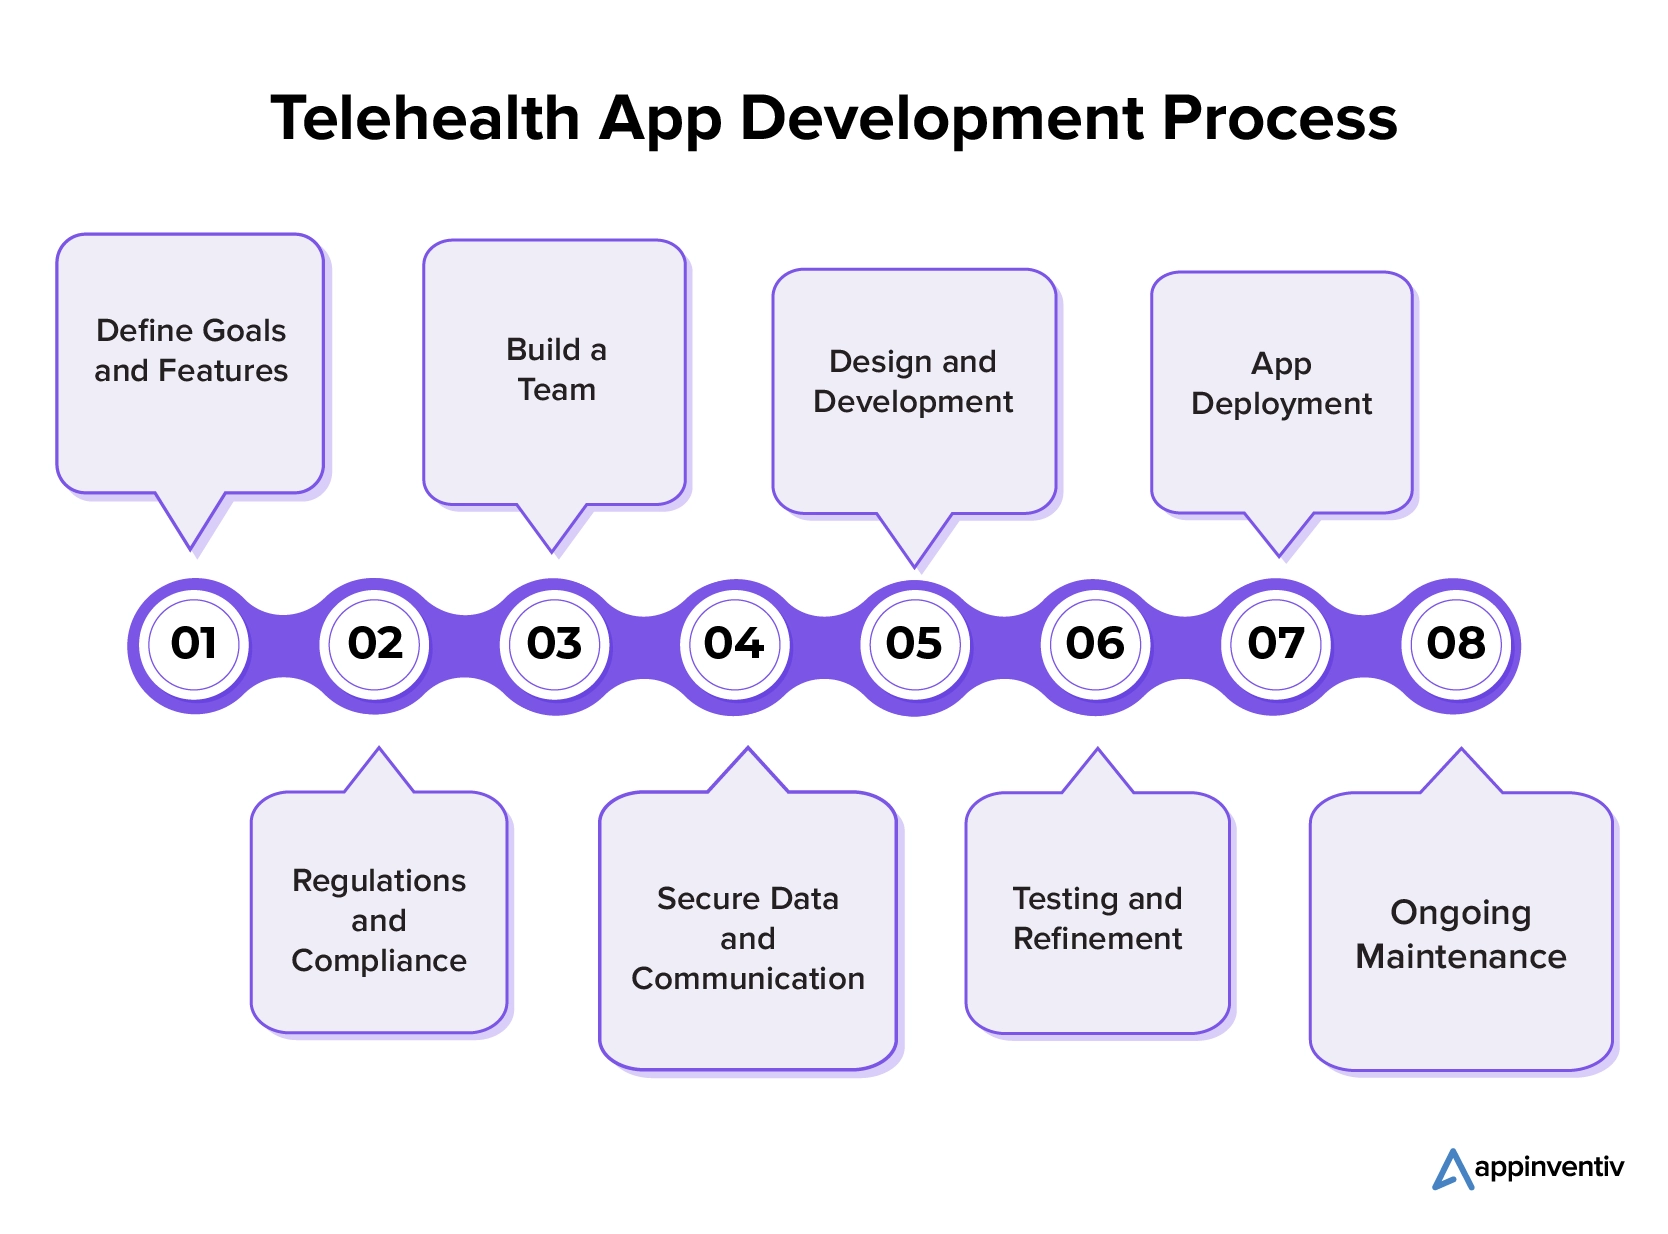  Development Process for Telehealth Applications